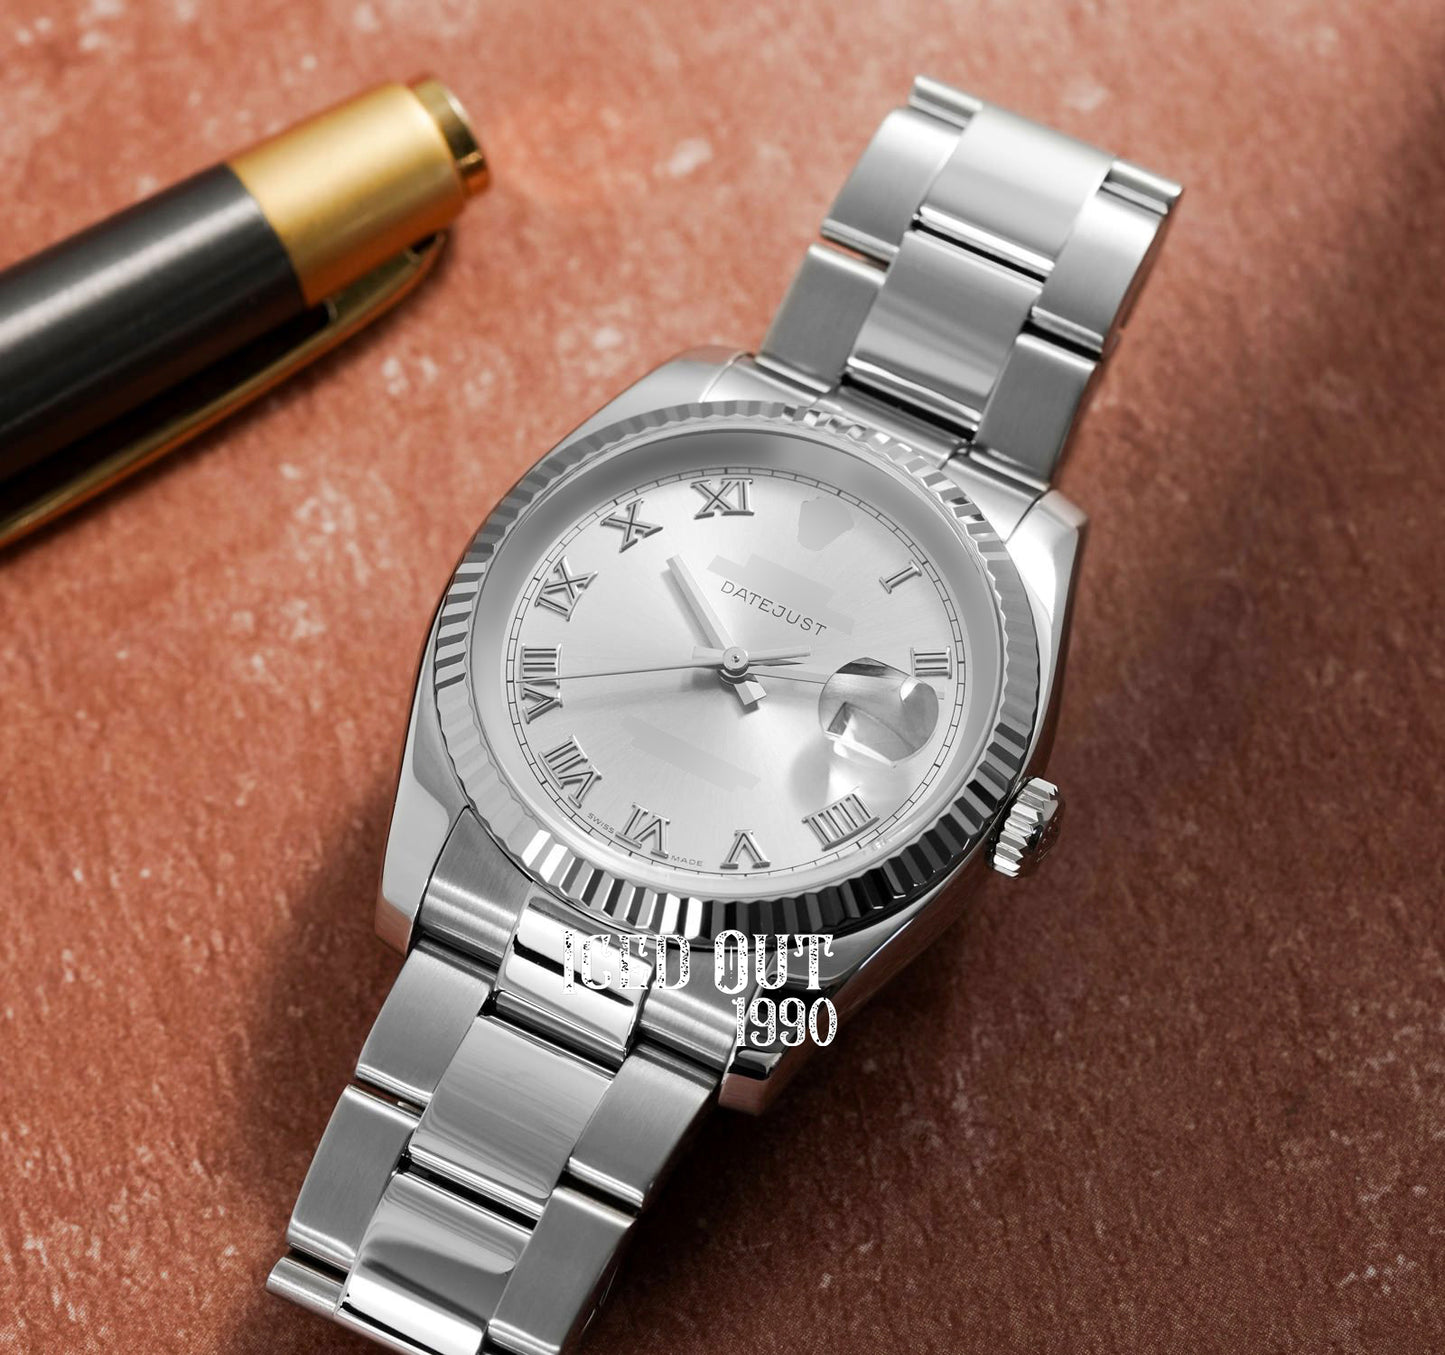 Moissanite Watch in Premium Stainless Steel Formal Watch For Men